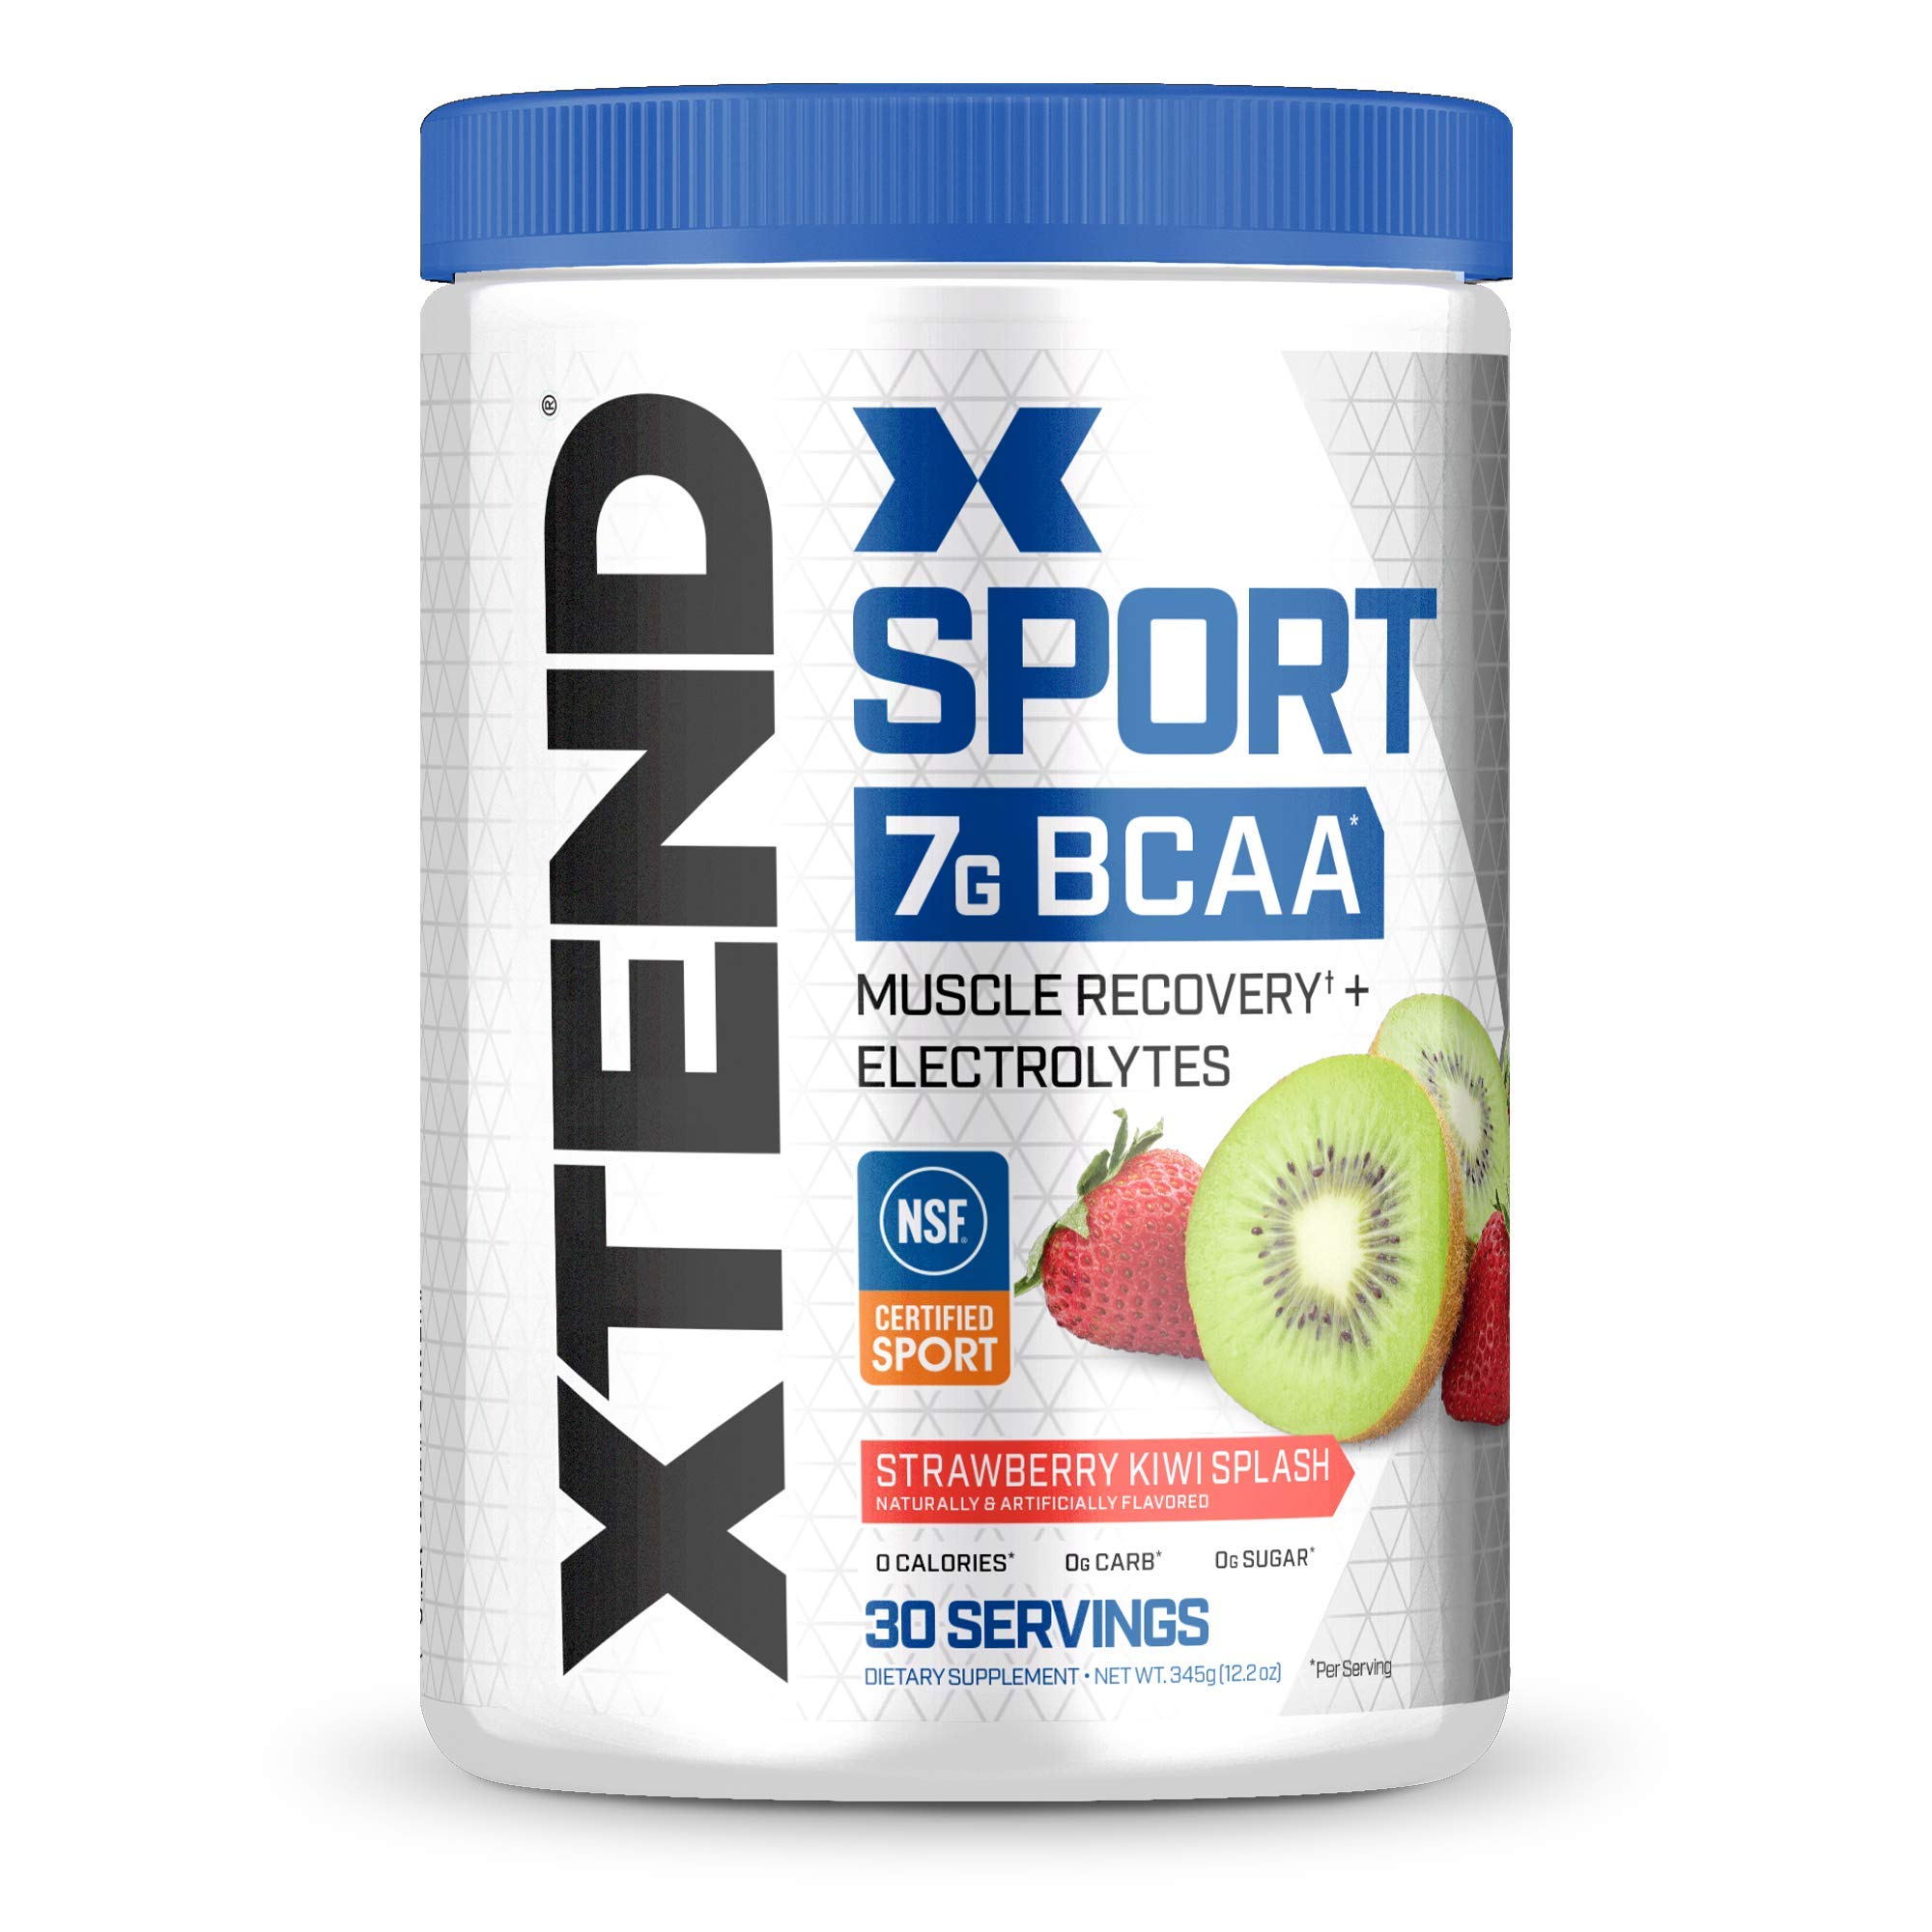 XTEND Sport BCAA Powder Strawberry Kiwi Splash - Electrolyte Powder for Recovery & Hydration with Amino Acids - 30 Servings